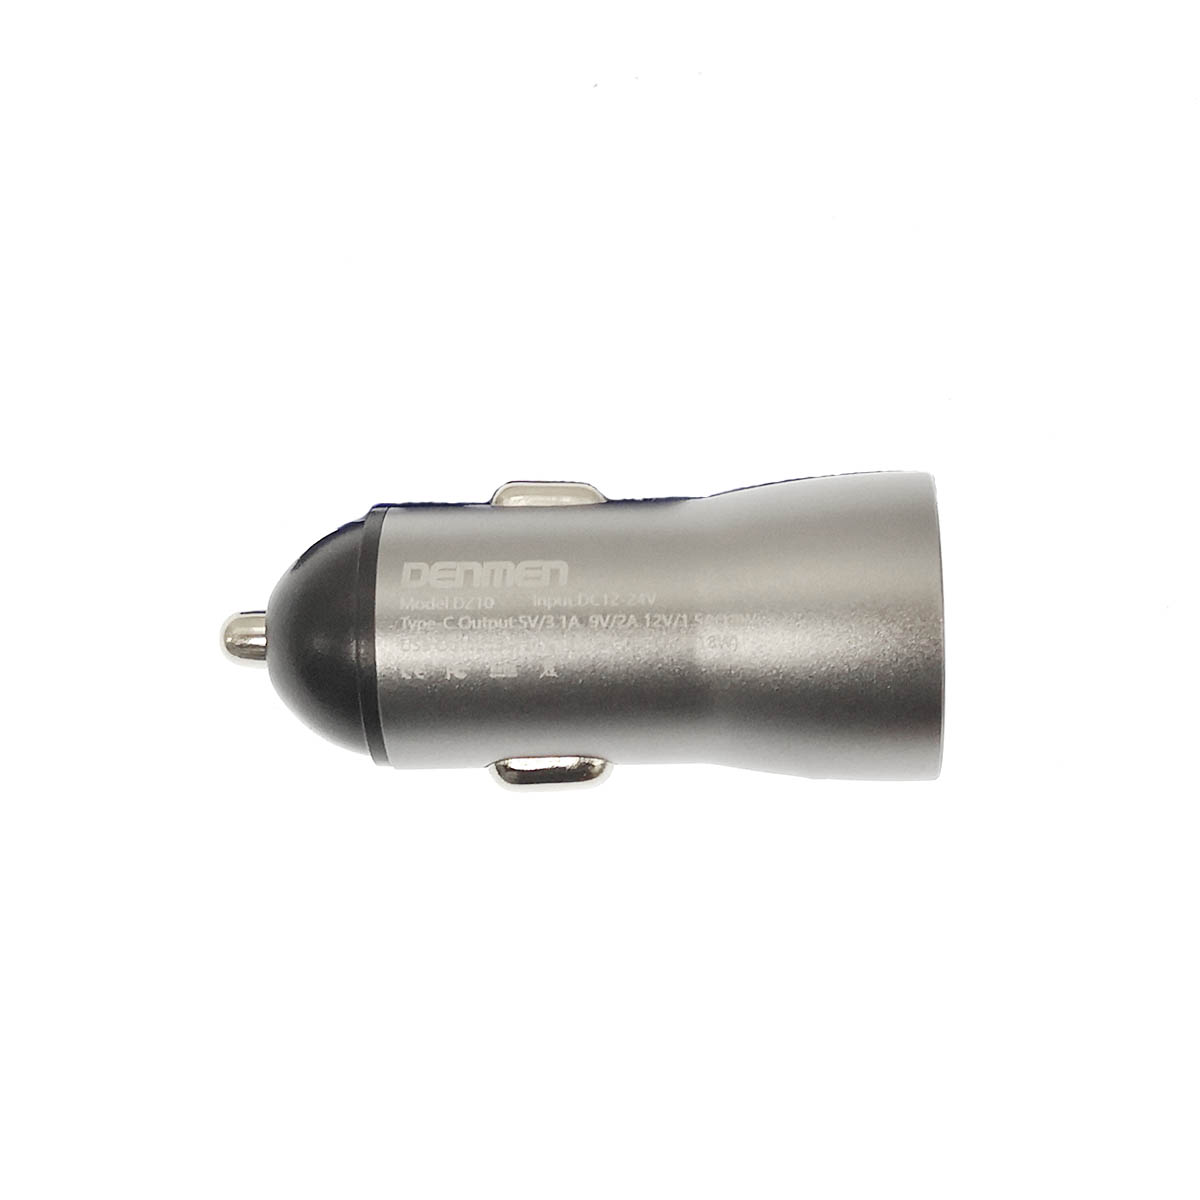 АЗУ (Автомобильное зарядное устройство) DENMEN DZ10, 18W, QC3.0, 1 USB, 1 USB Type C, цвет серебристый